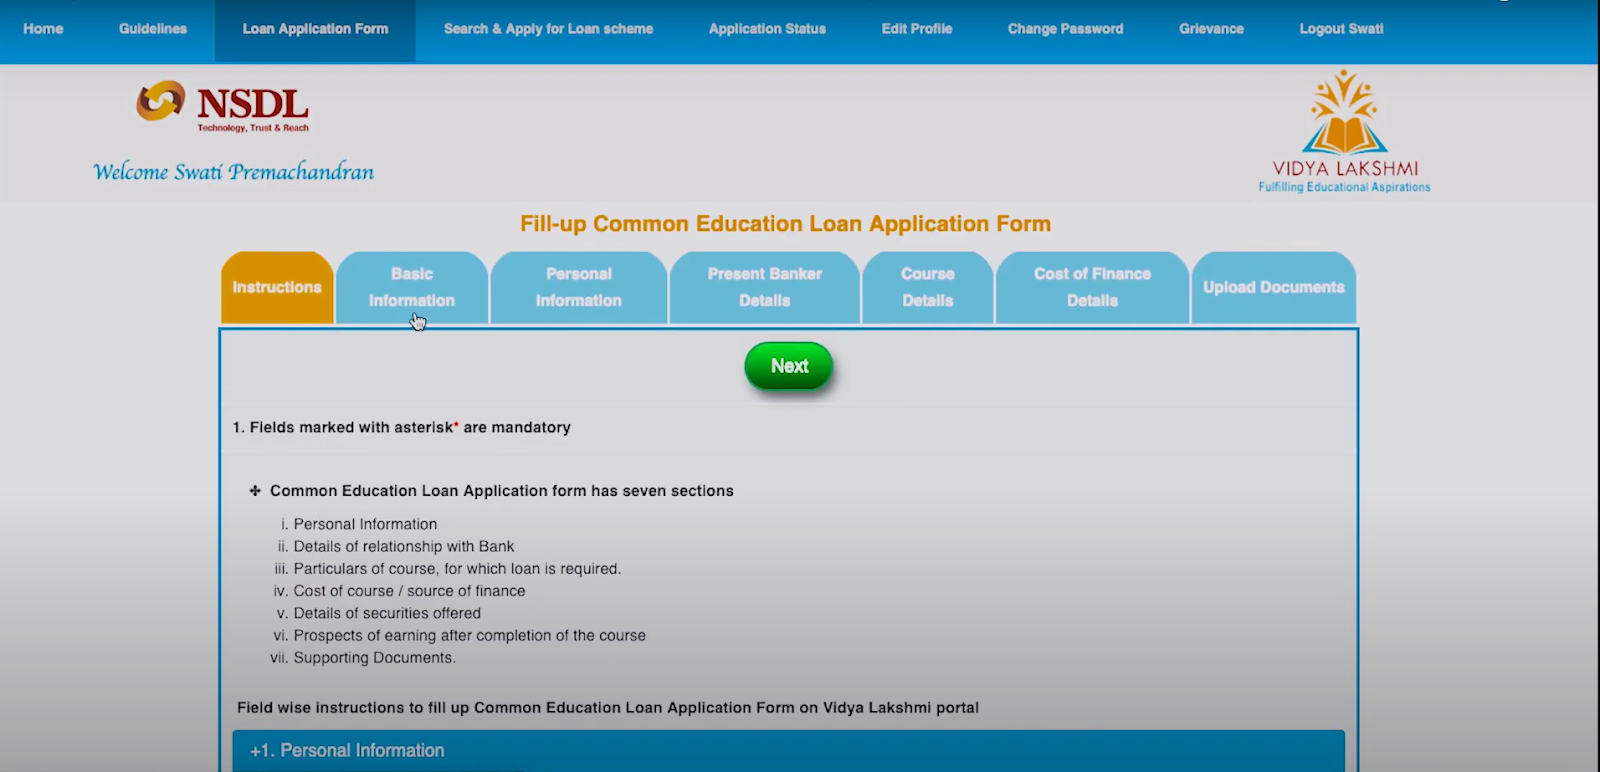 Filling The Application Form - Vidya Lakshmi Portal 